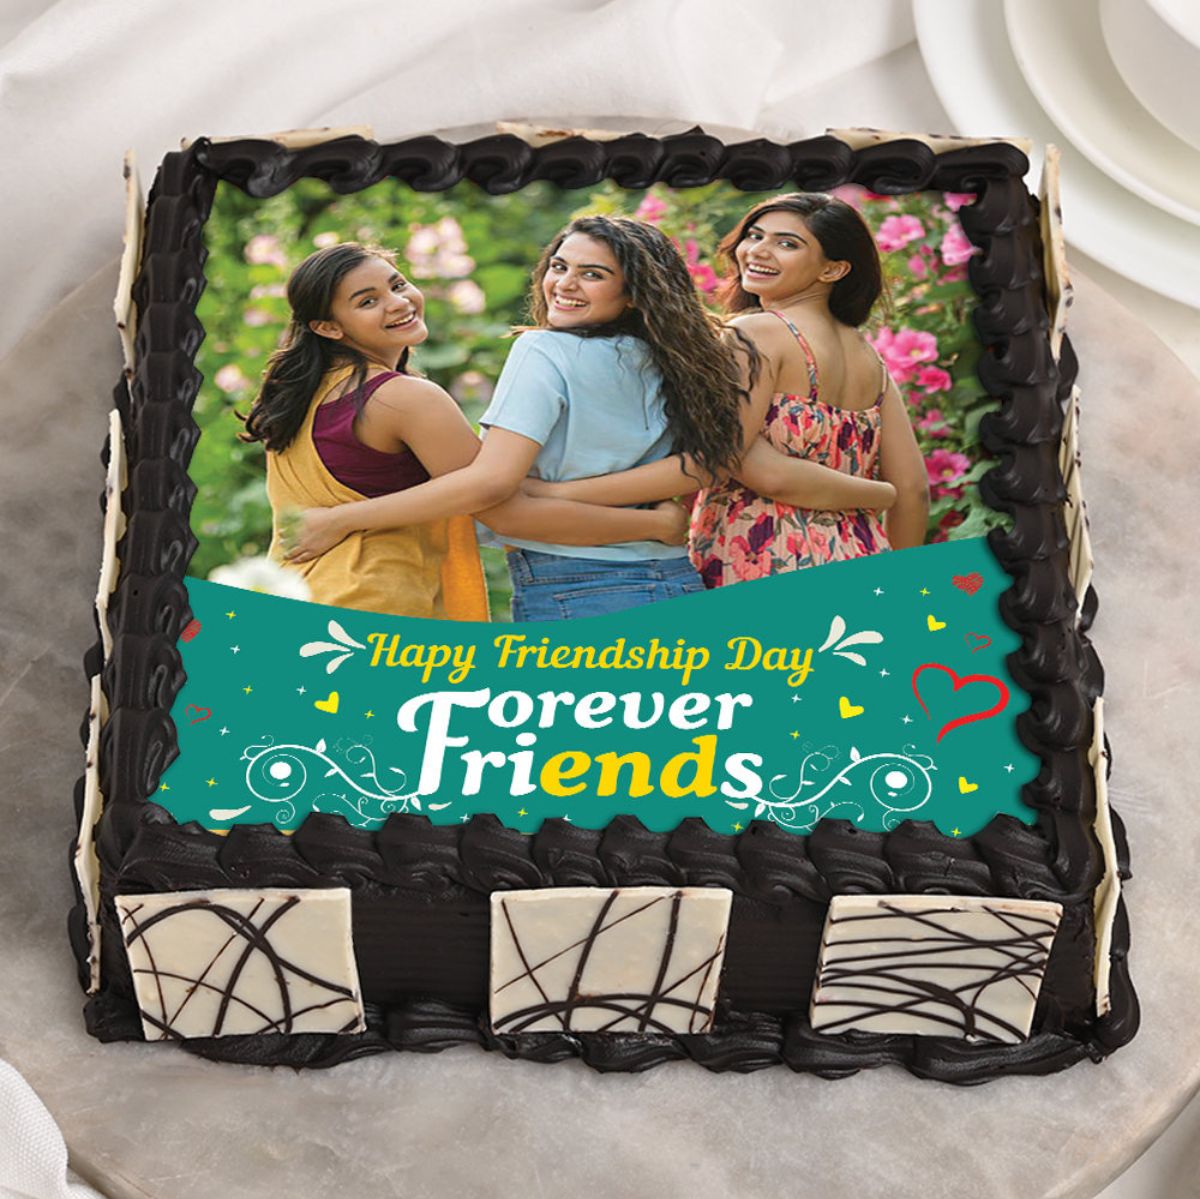 Happy Friendship Day Photo Cake